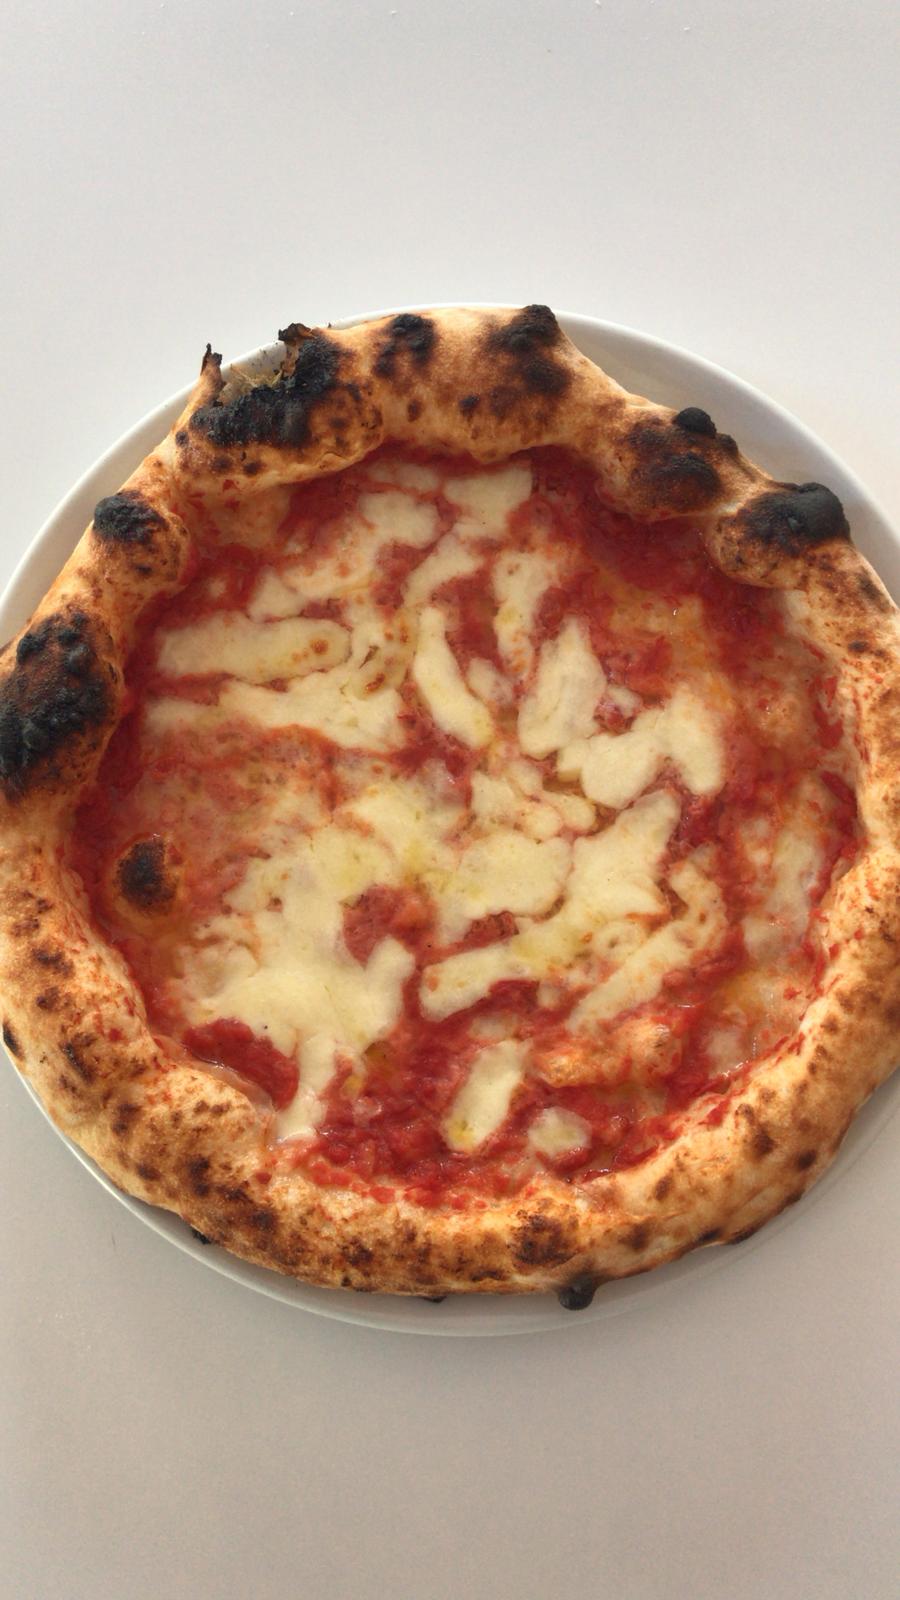 < img src="http://www.la-notizia.net/pizza" alt="pizza"